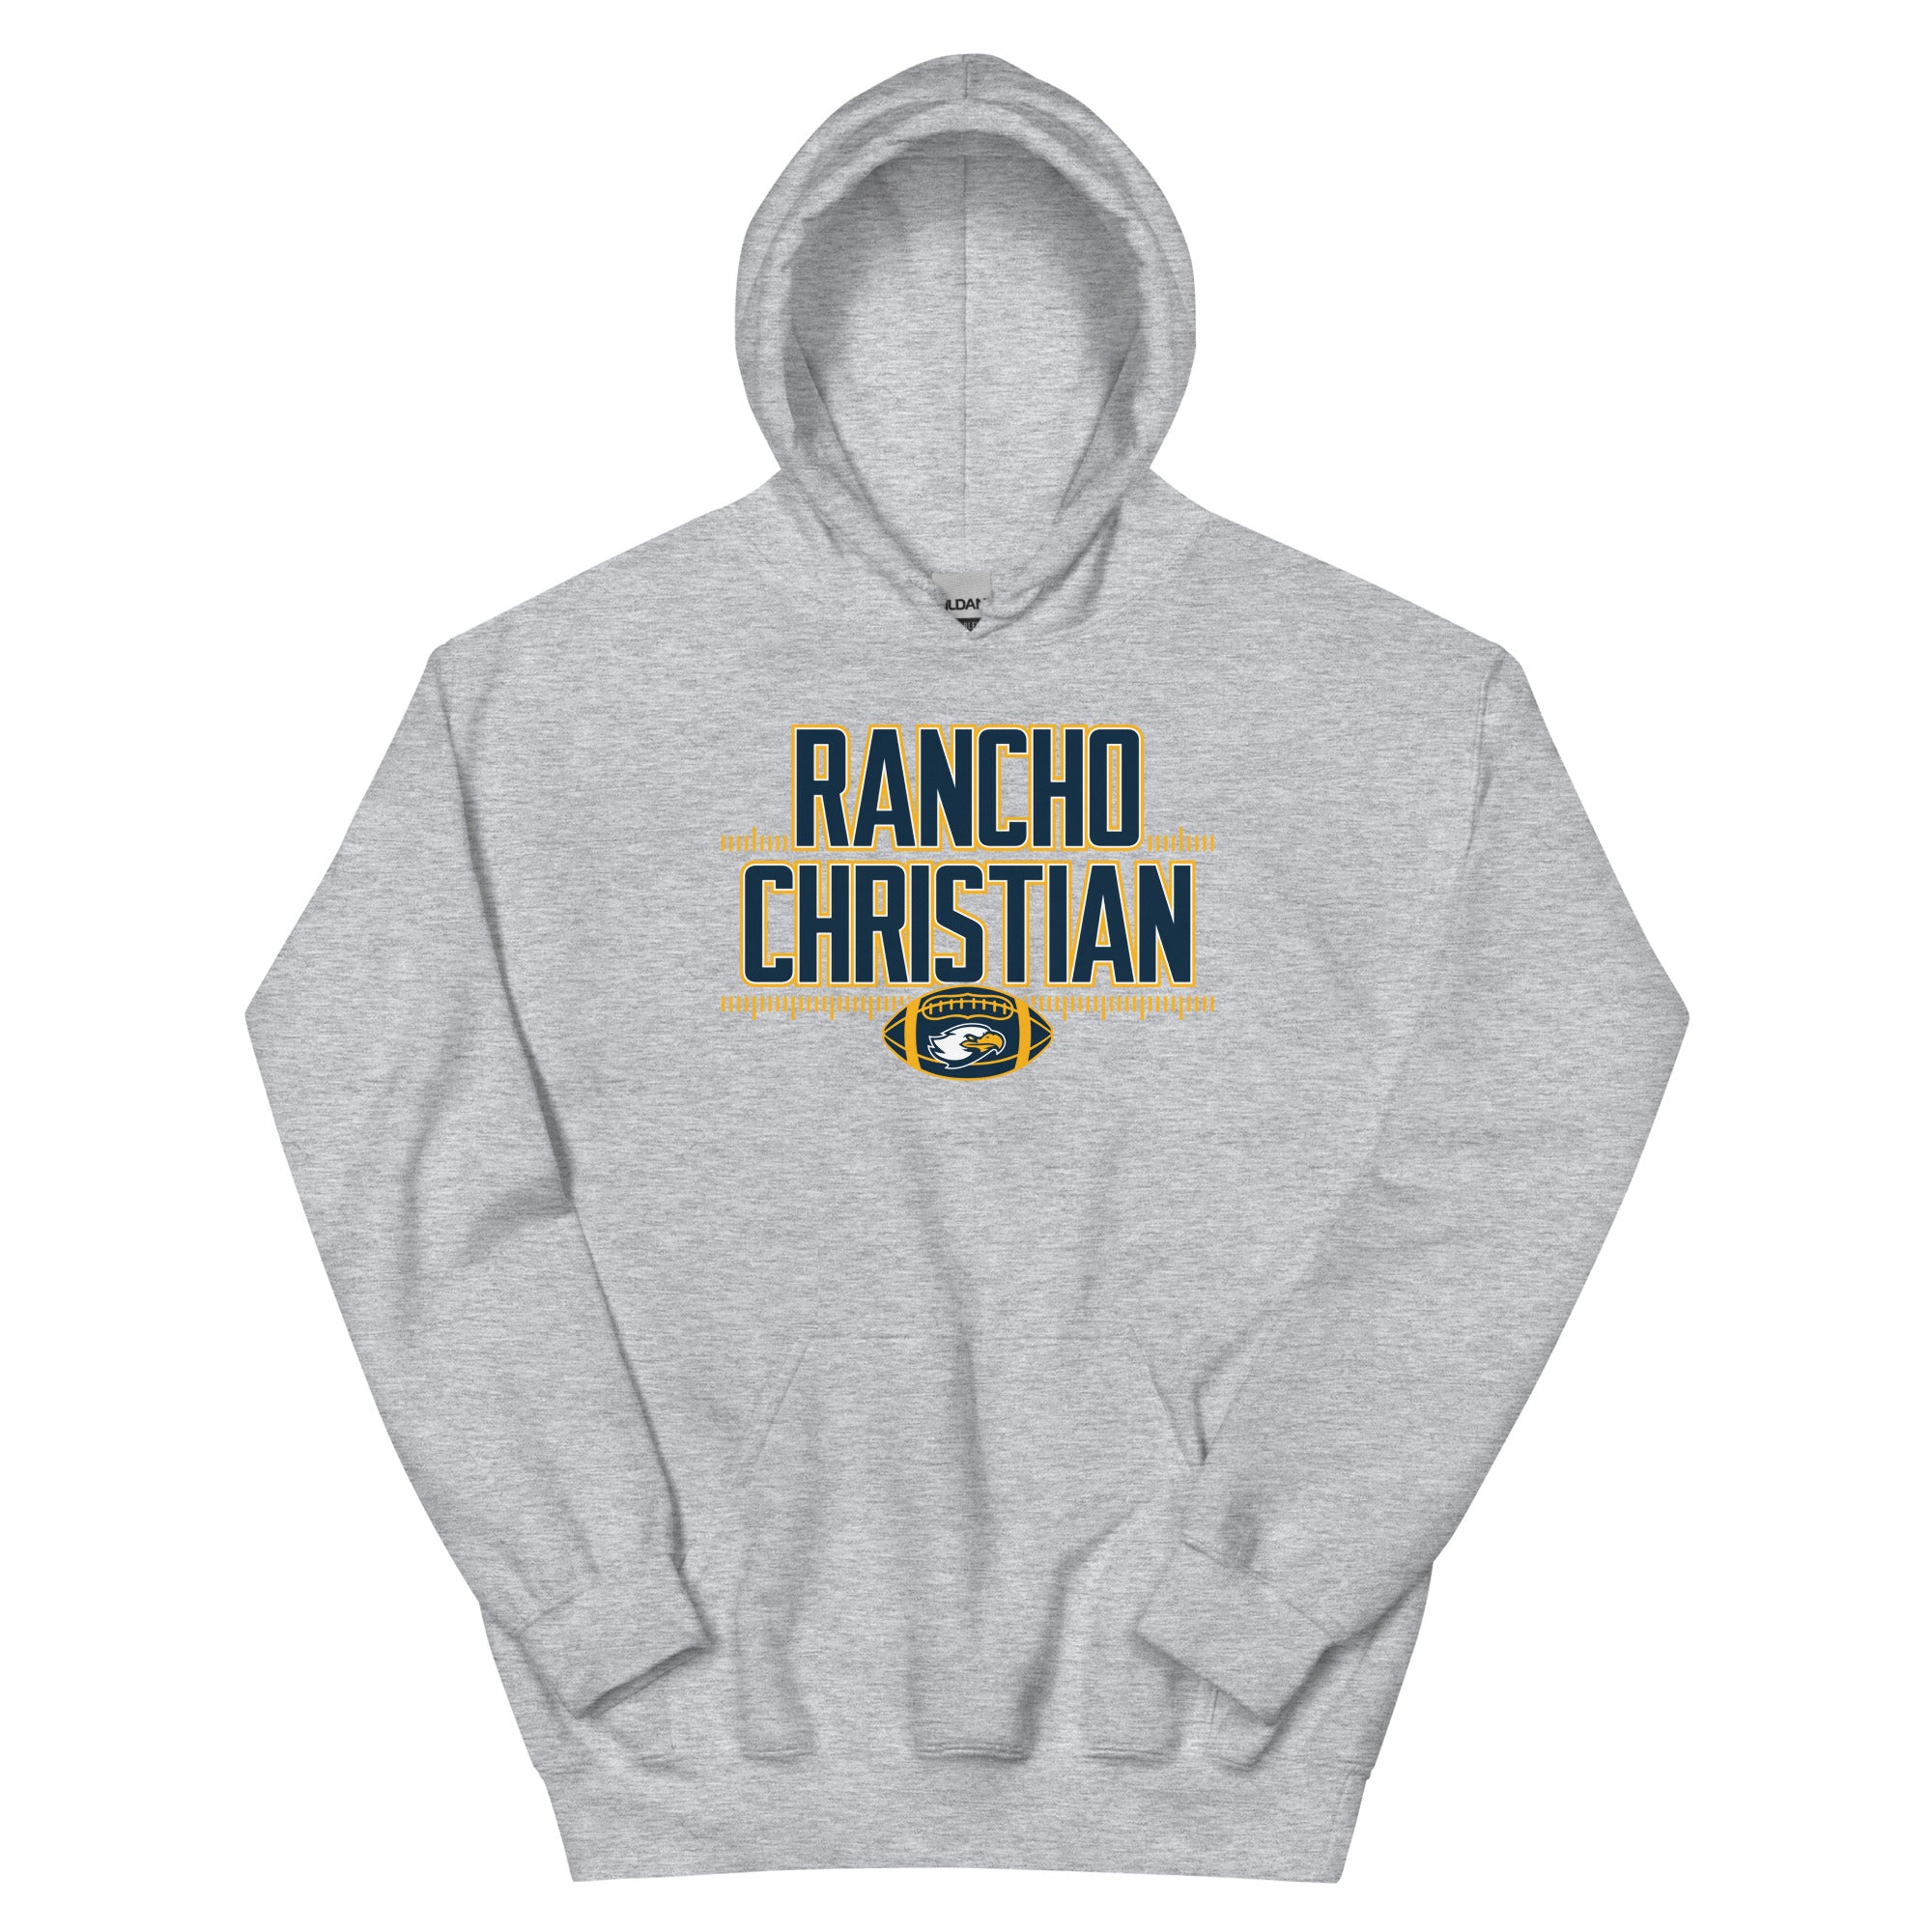 Rancho Christian Unisex Heavy Blend Hoodie